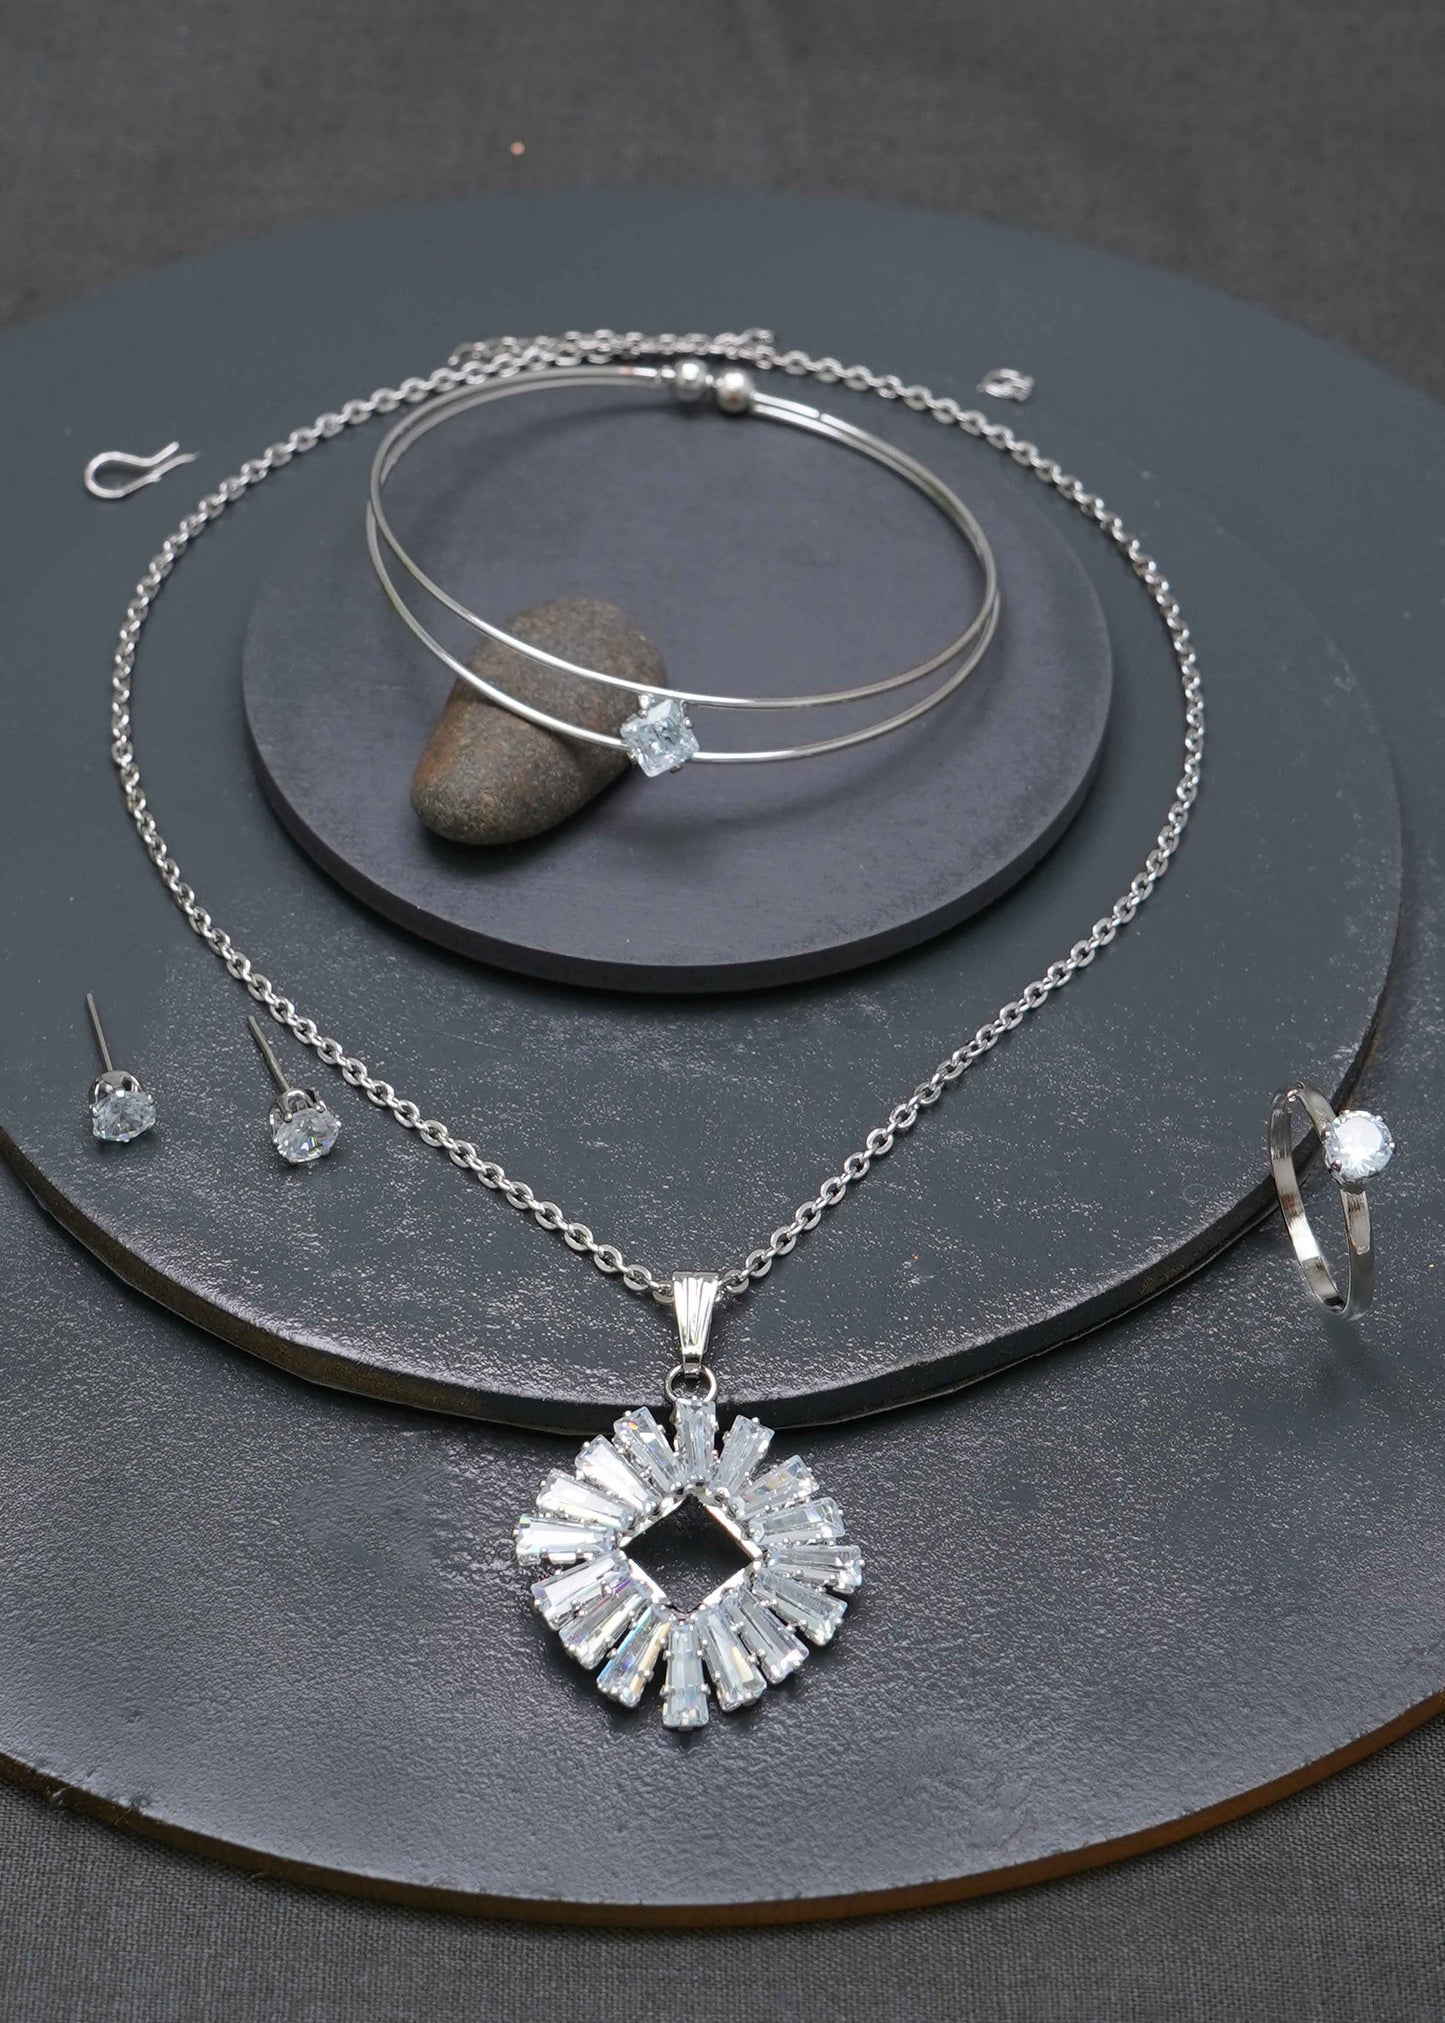 Beautiful Ad Diamond Studs Necklace Set For Women and Girls By Ramdev Art Fashion Jewellery